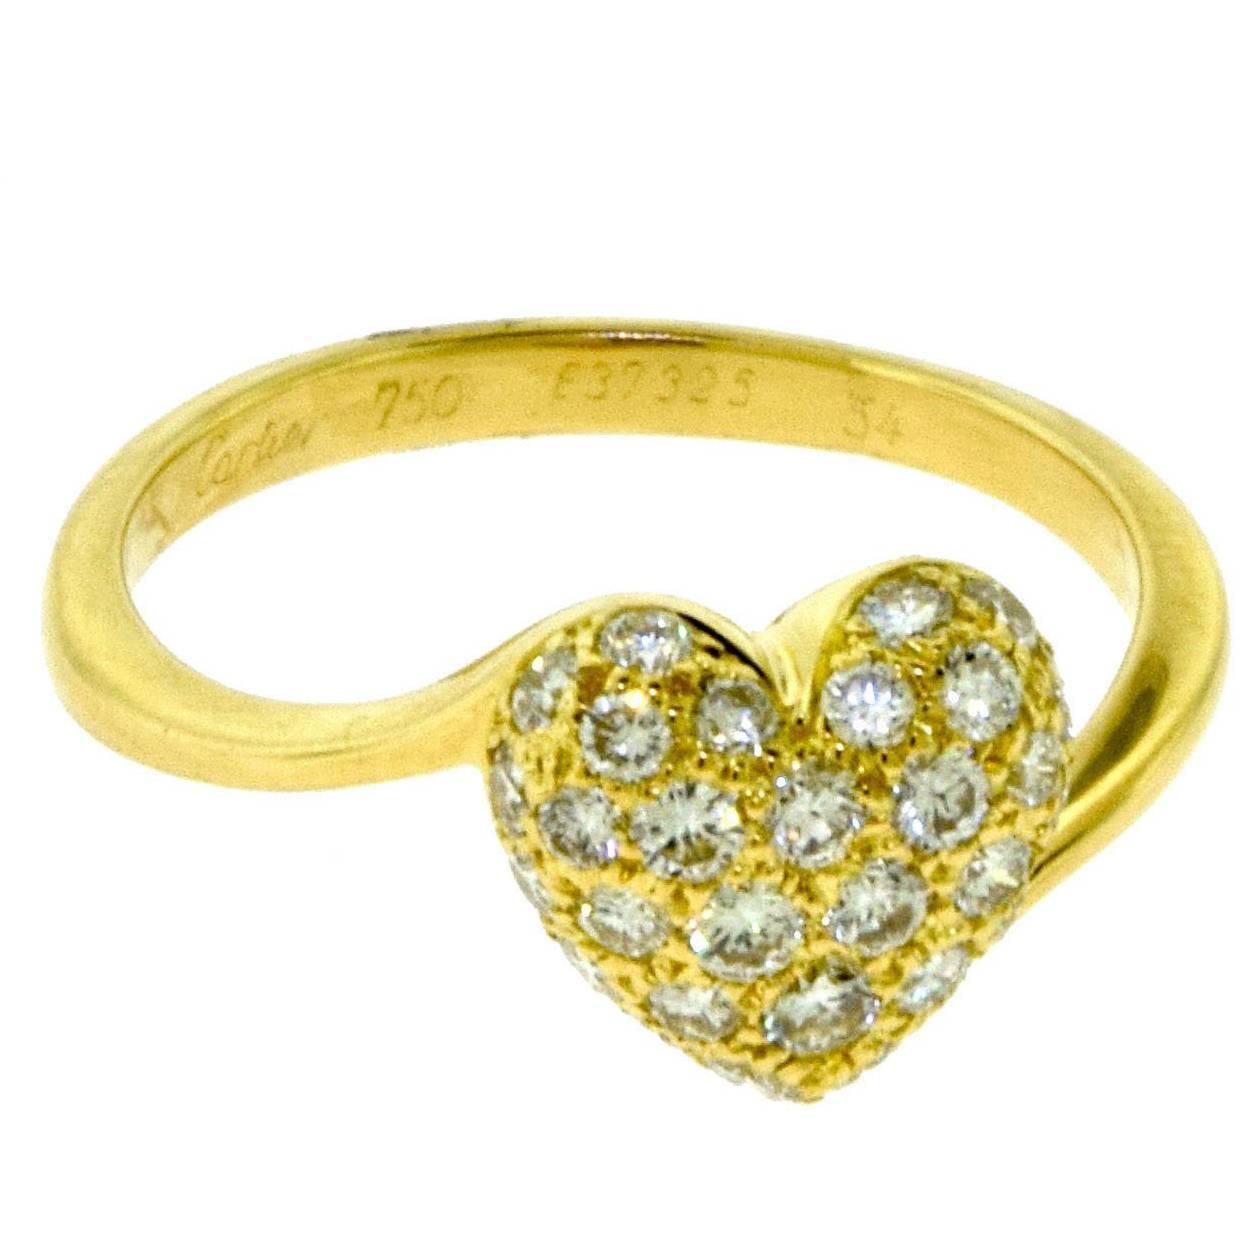 Vintage Cartier Diamond Heart Ring in 18 Karat Yellow Gold